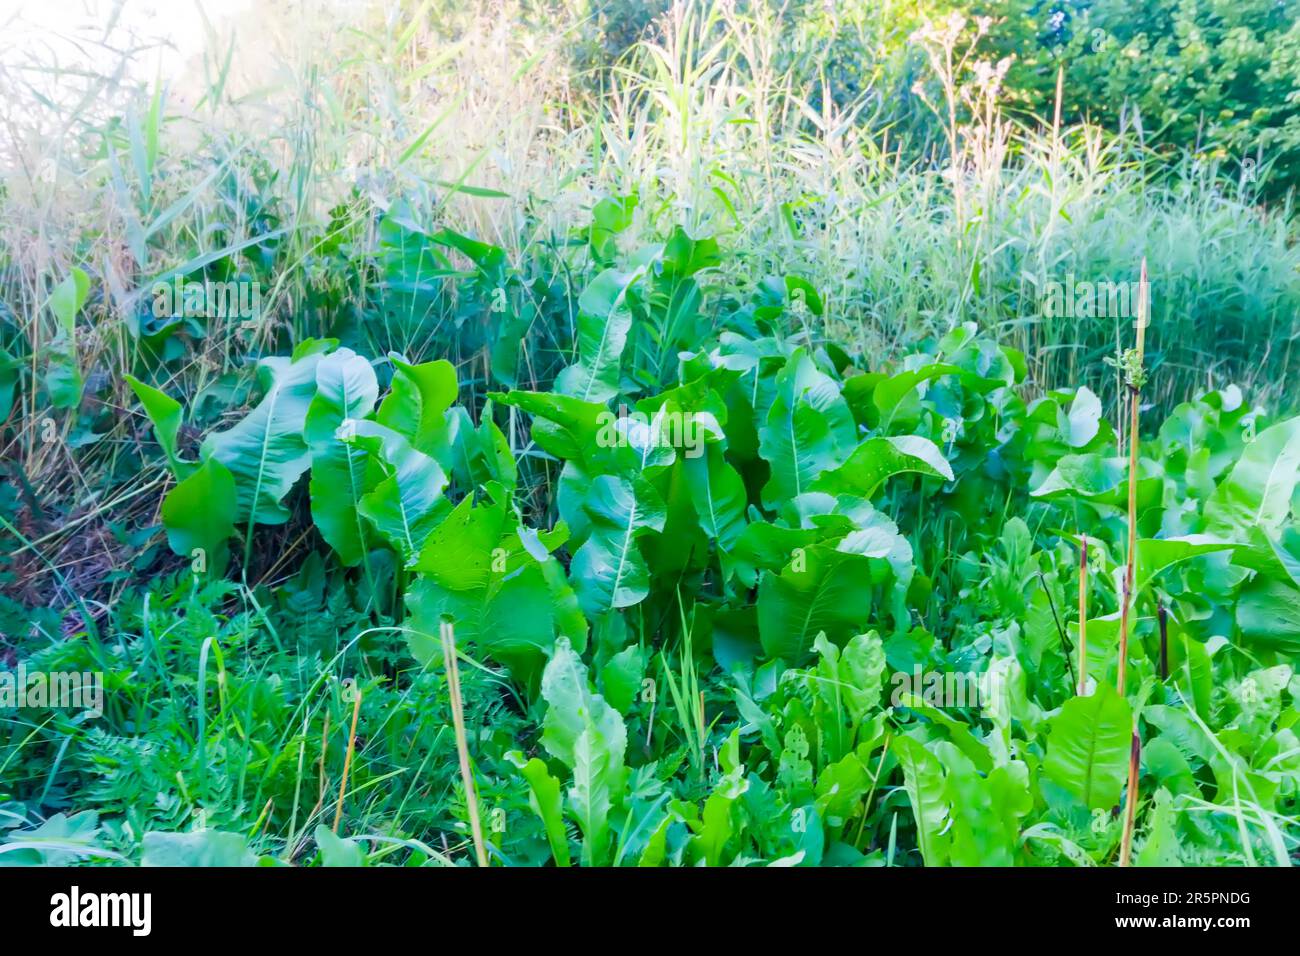 Horse-radish or Armoracia rusticana plants Stock Photo